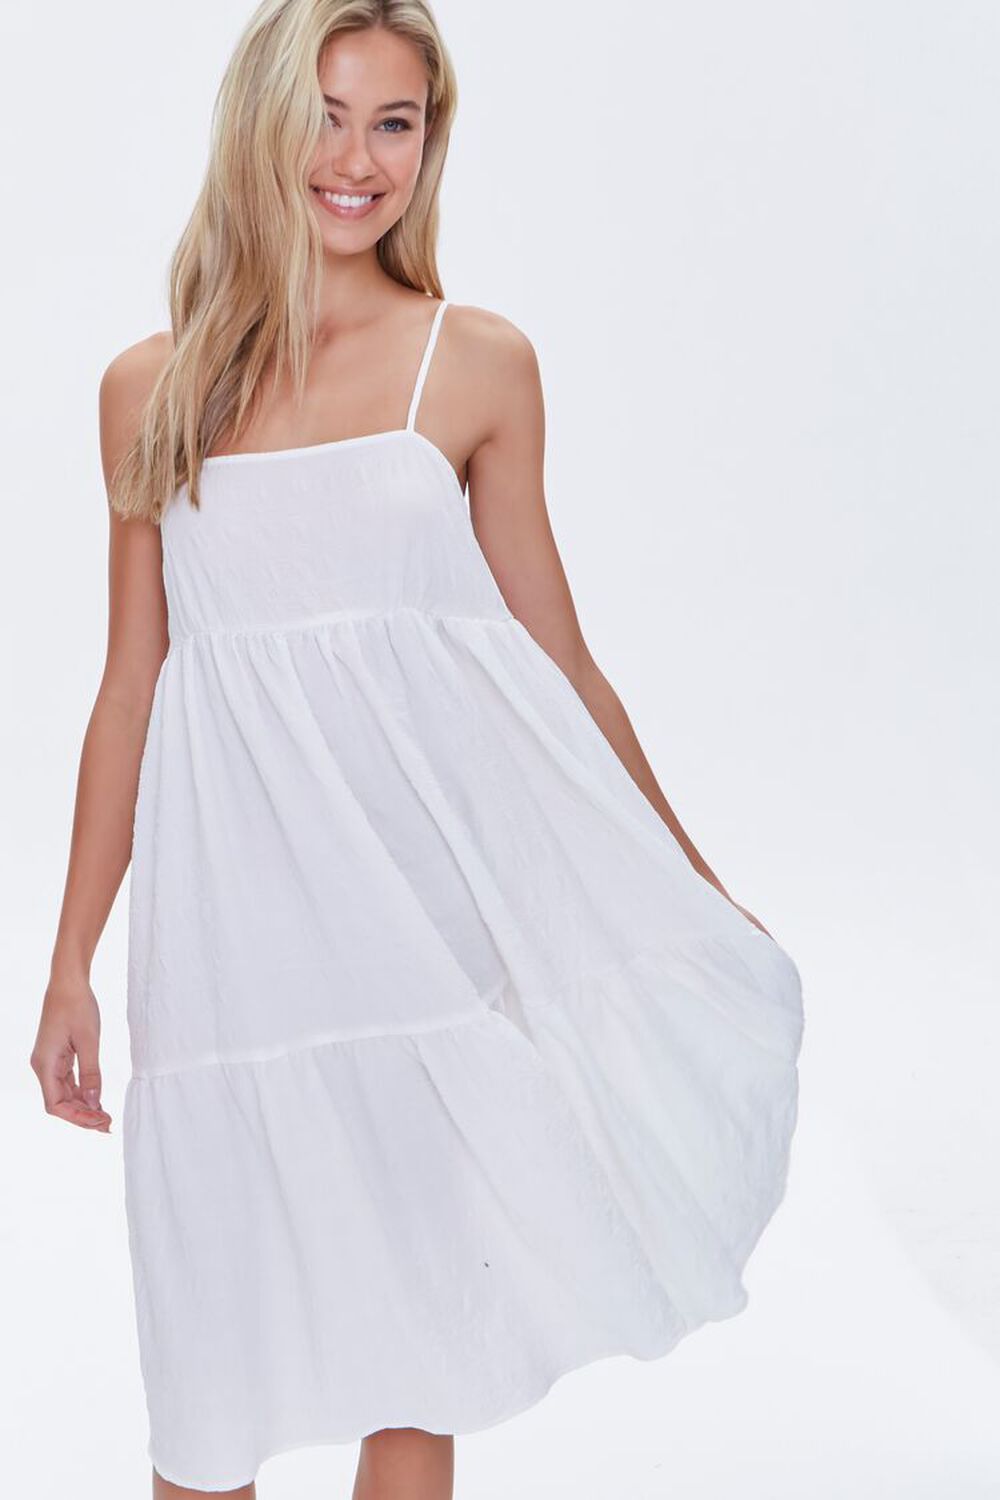 WHITE Textured Flounce Cami Dress, image 1